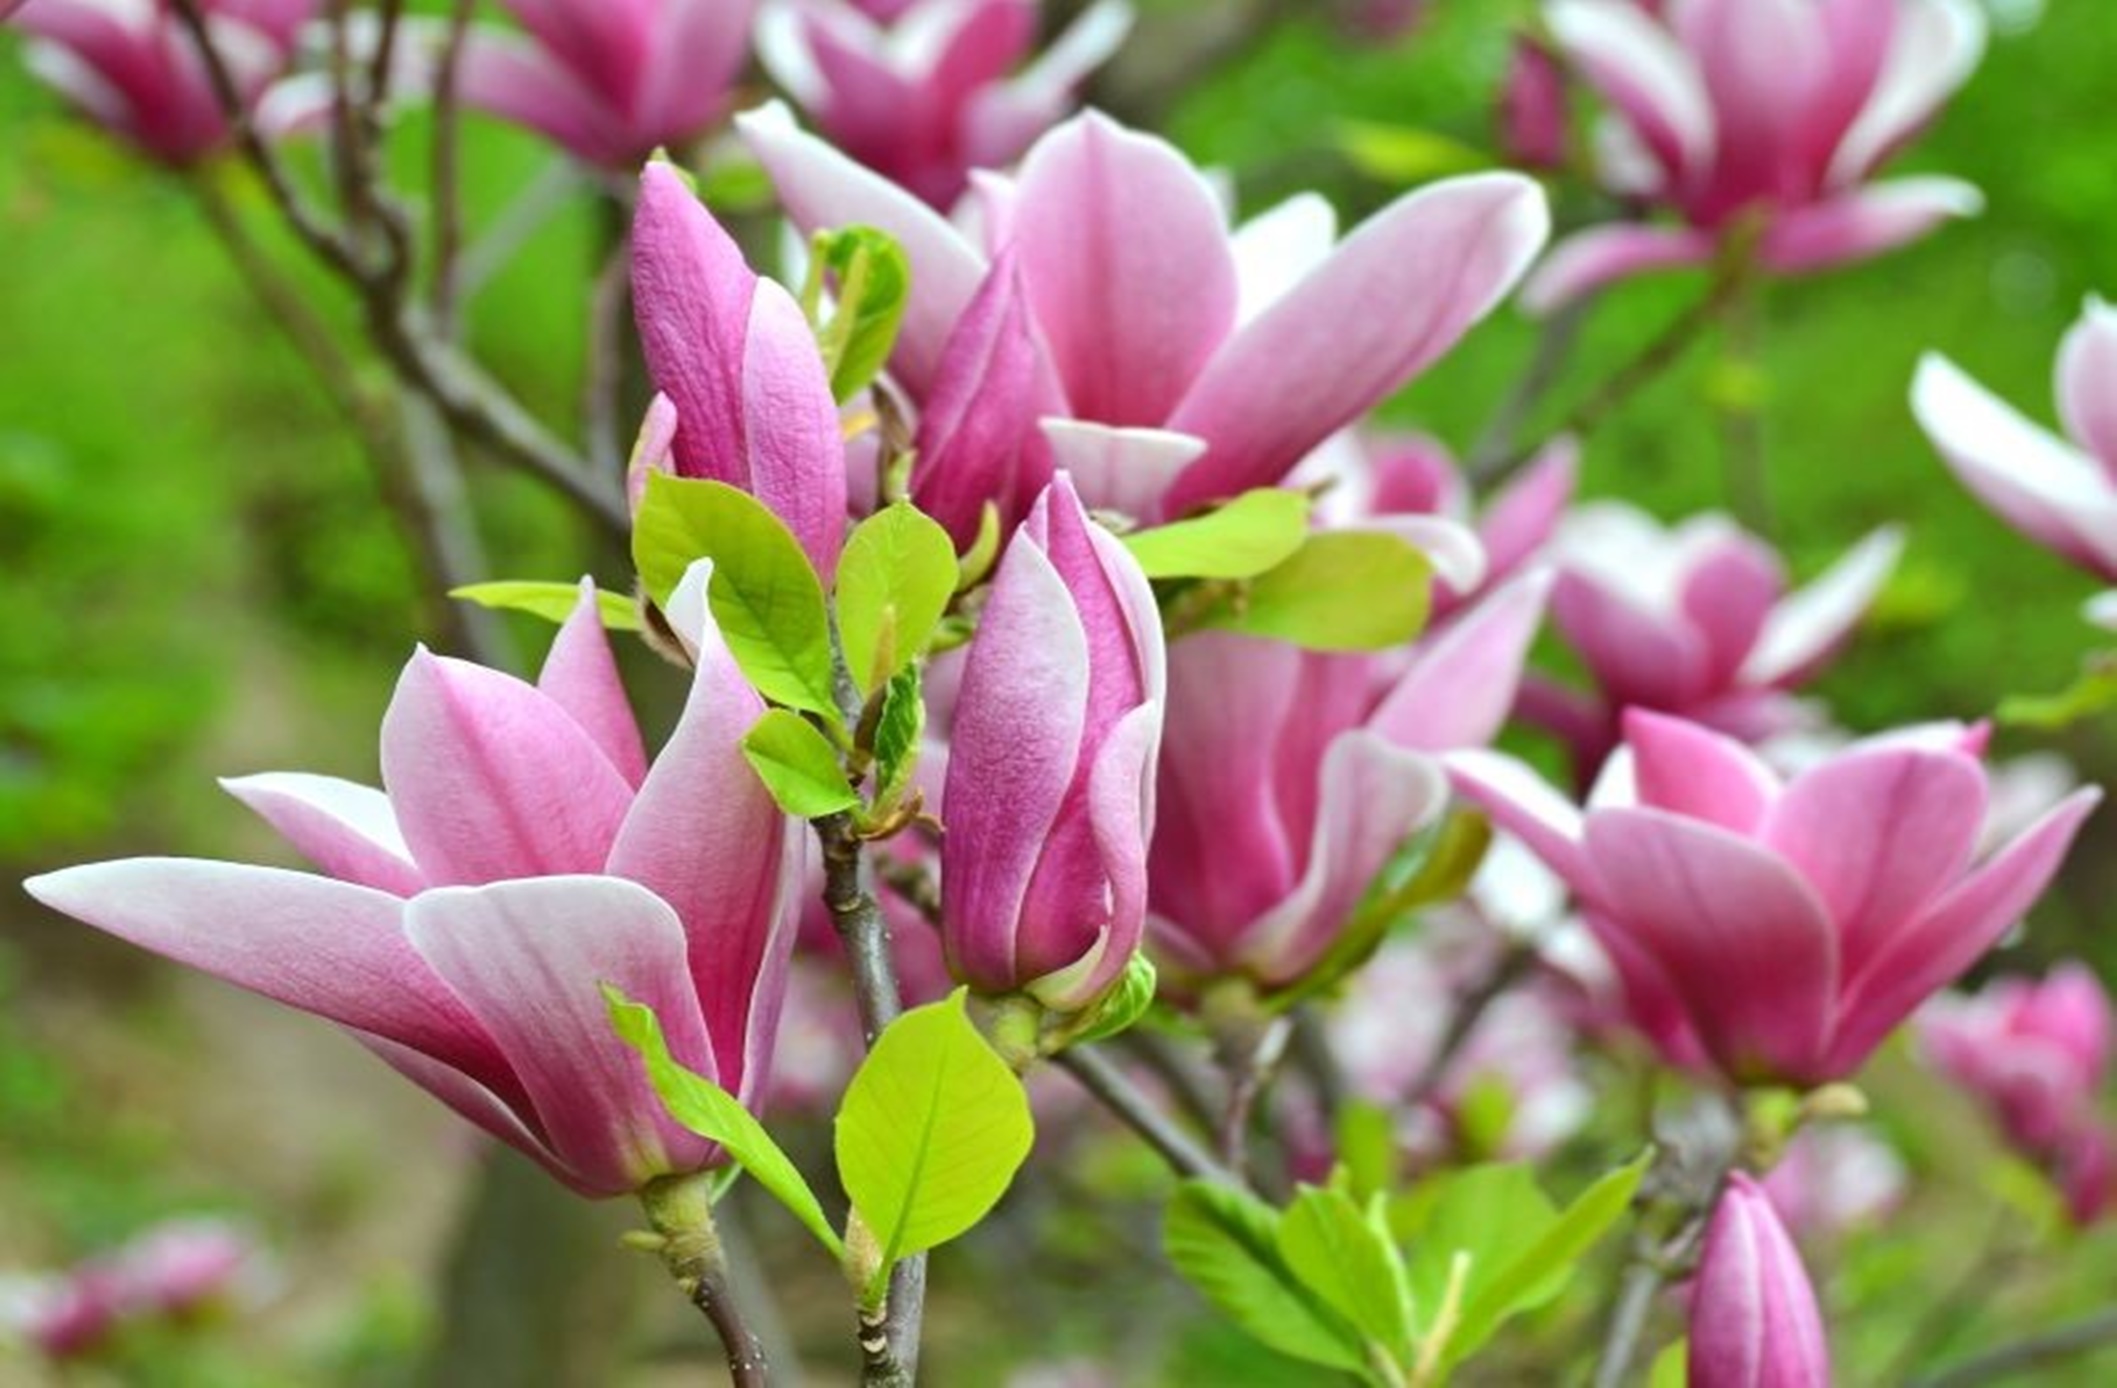 Scoarta de magnolie – Anticancerigen. Antidepresiv. Previne boala Alzheimer, controleaza anxietatea, protejeaza ficatul